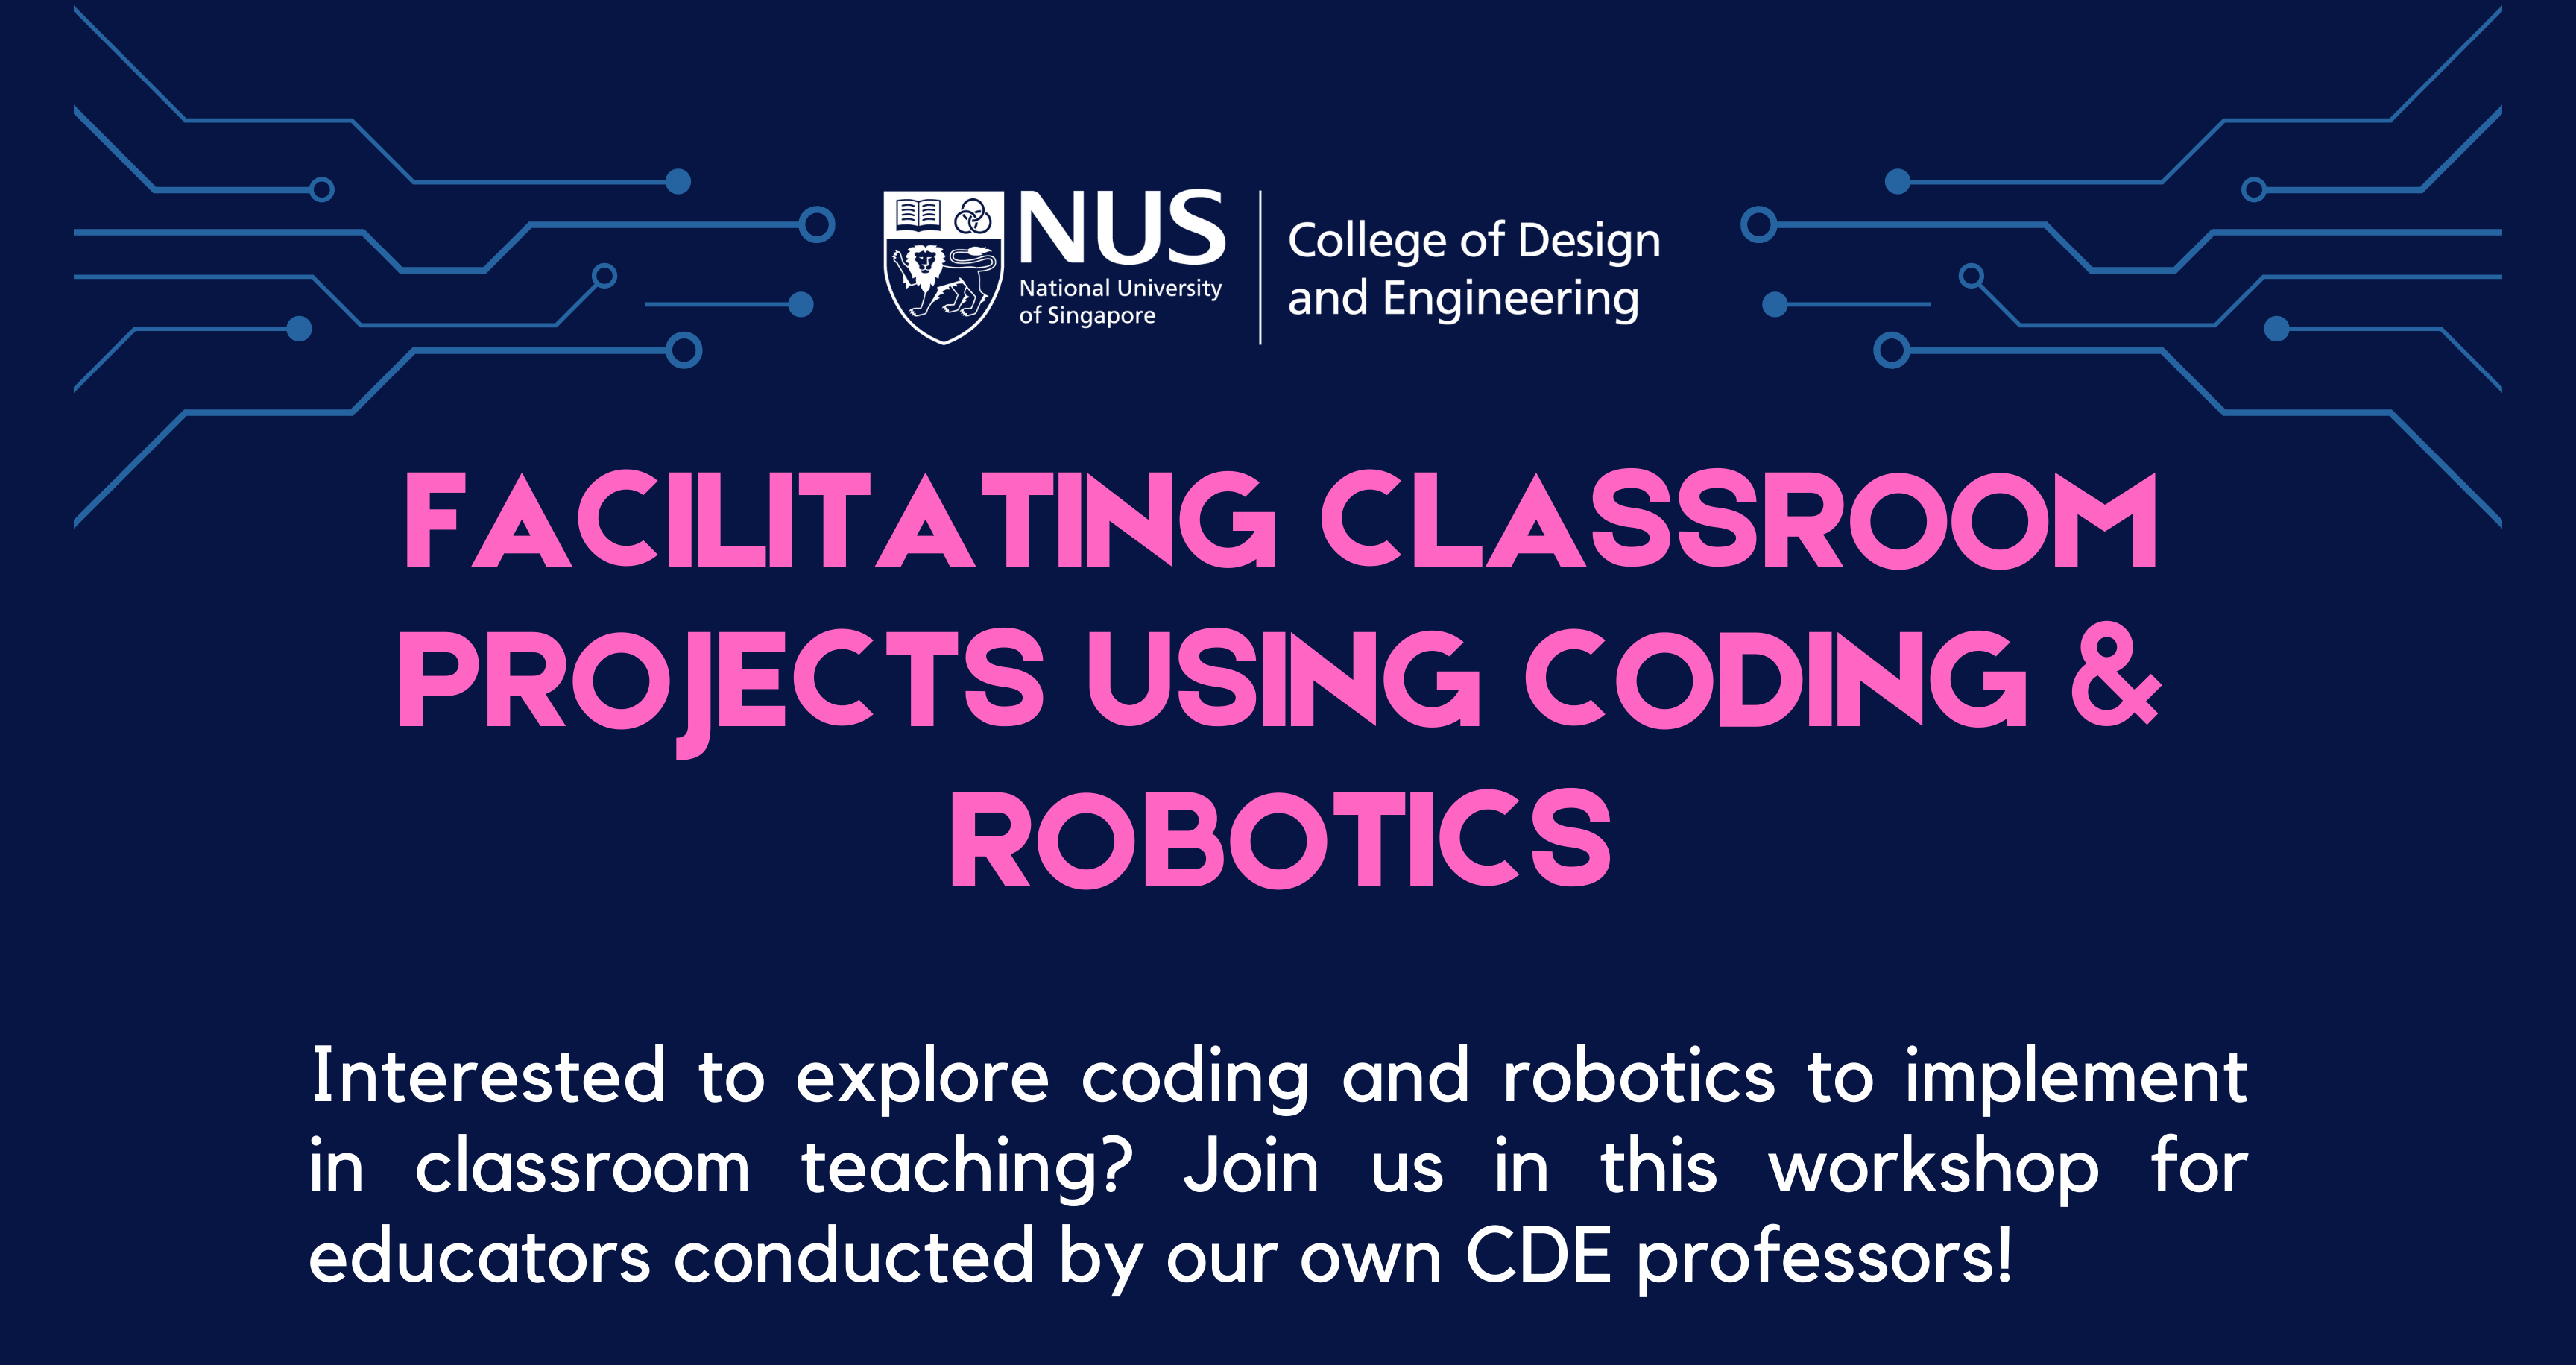 Coding and Robotics Workshop